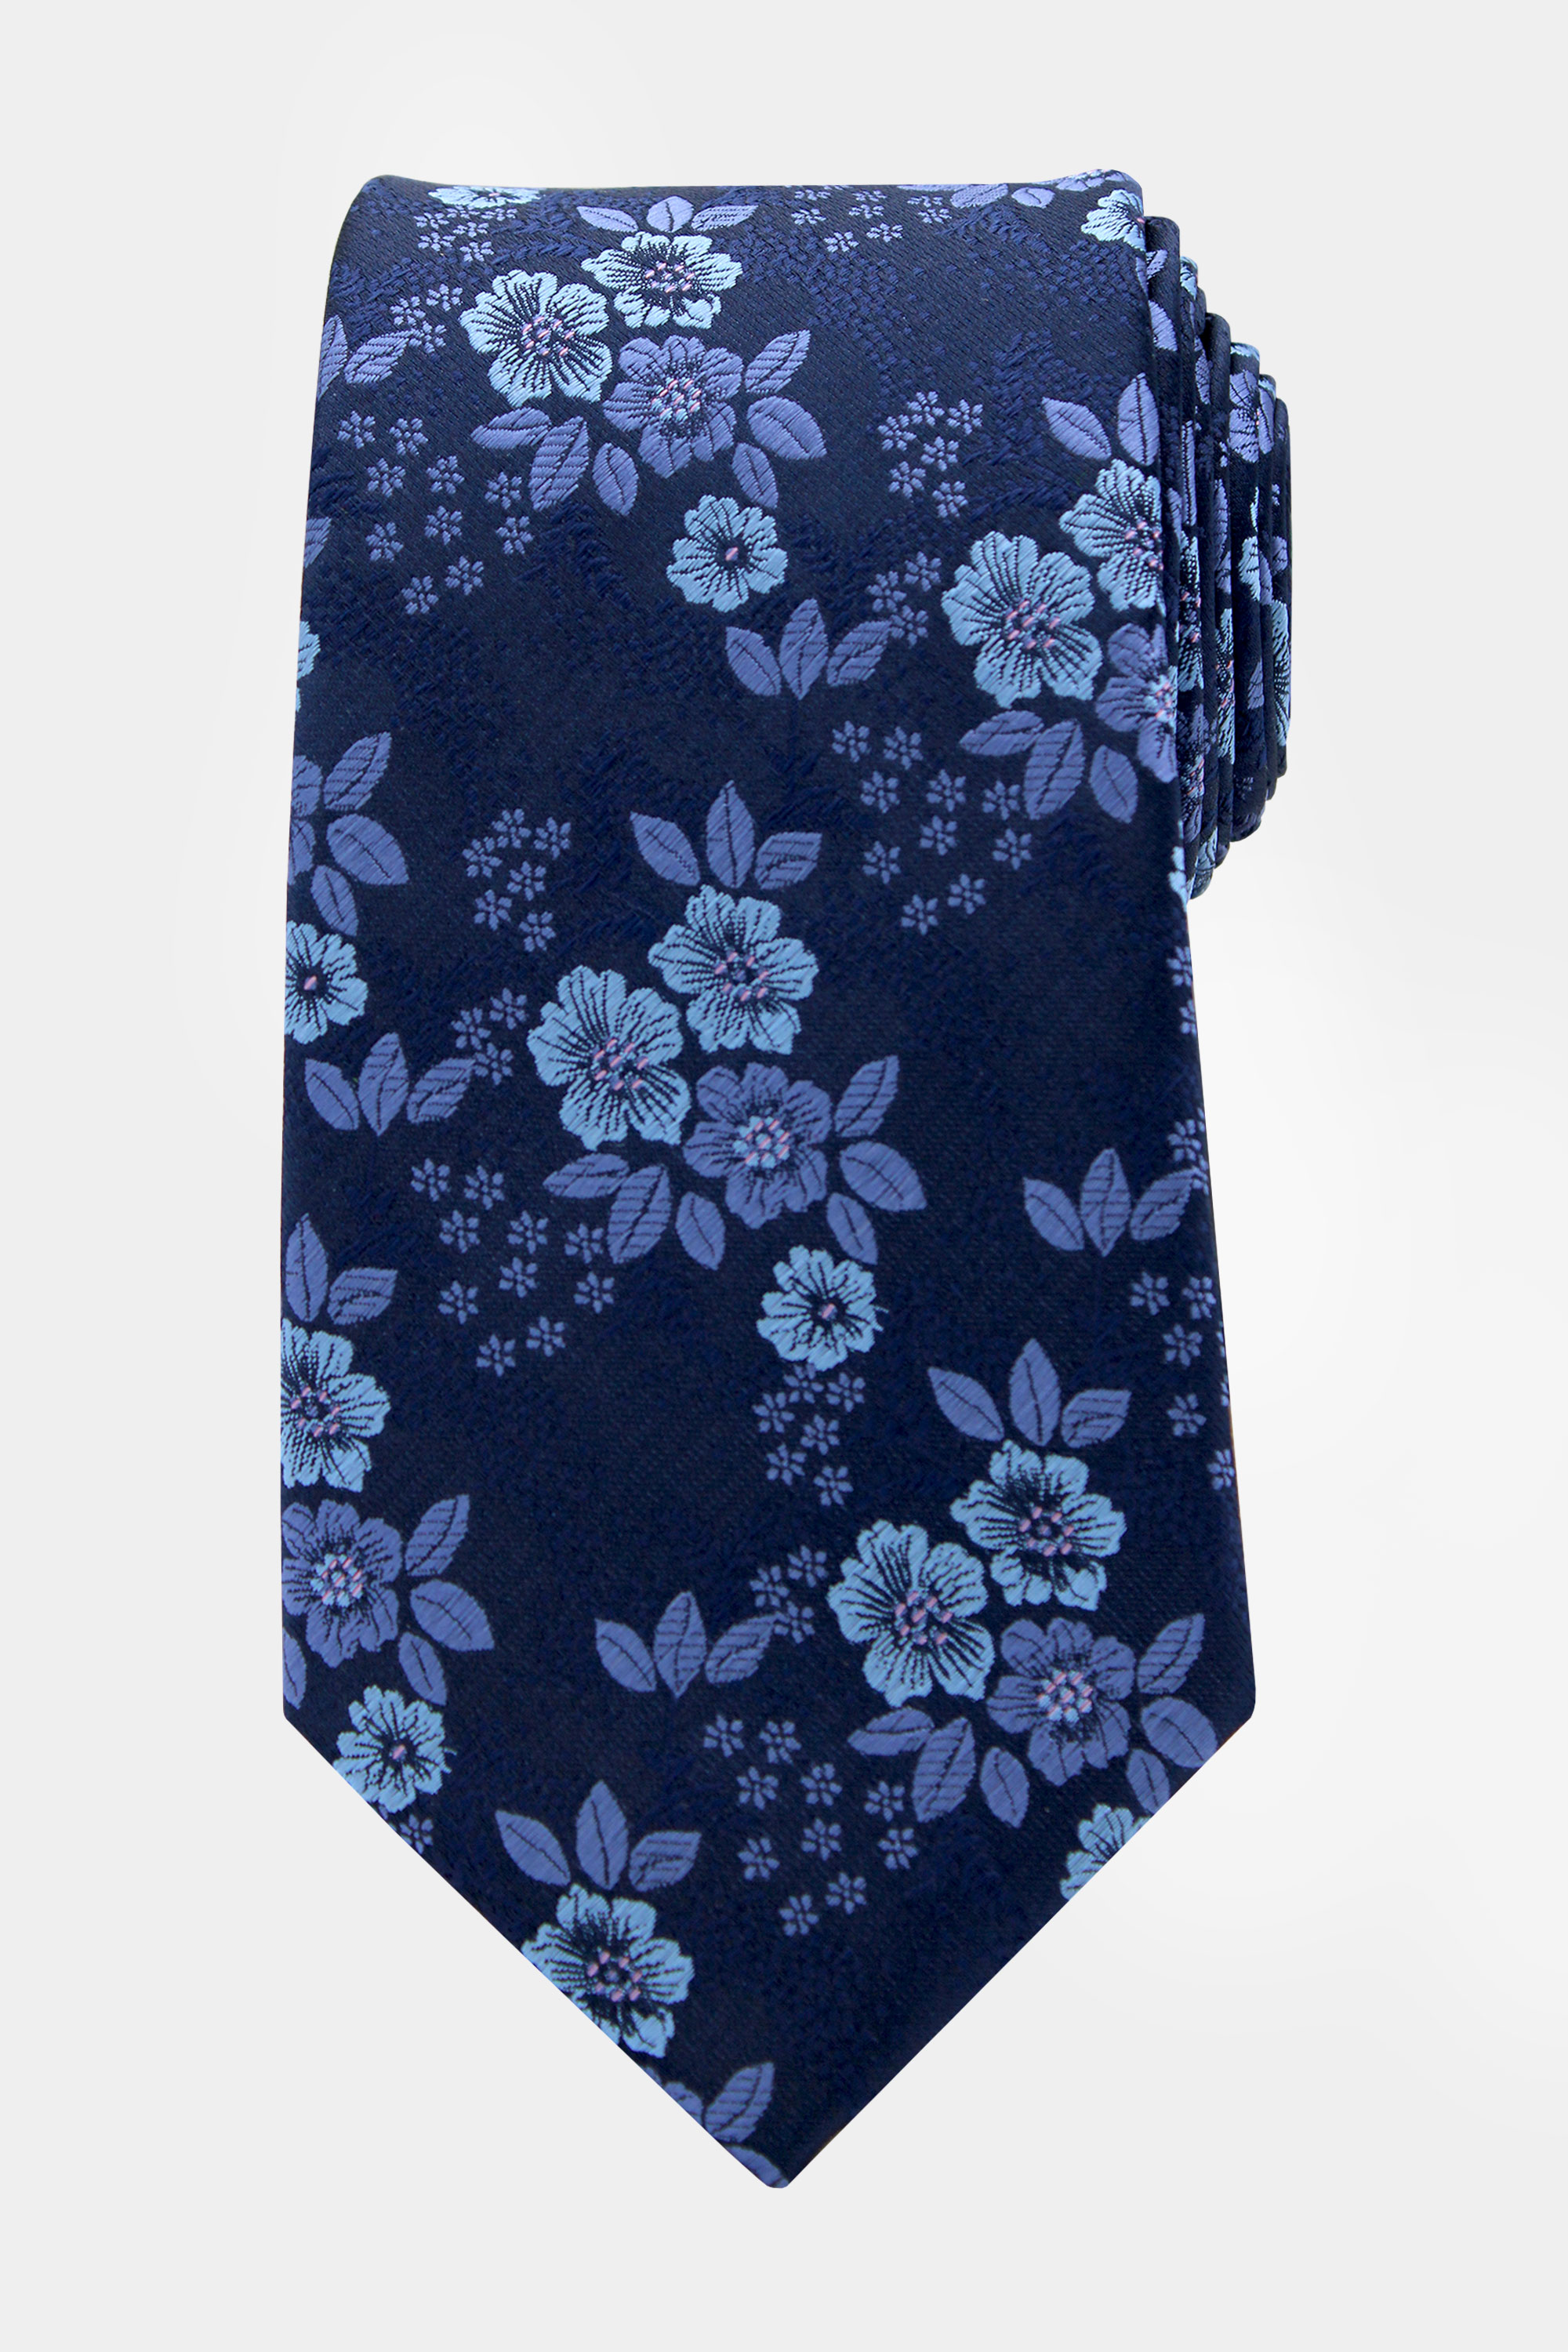 Navy-Blue-Floral-Tie-from-Gentlemansguru.com